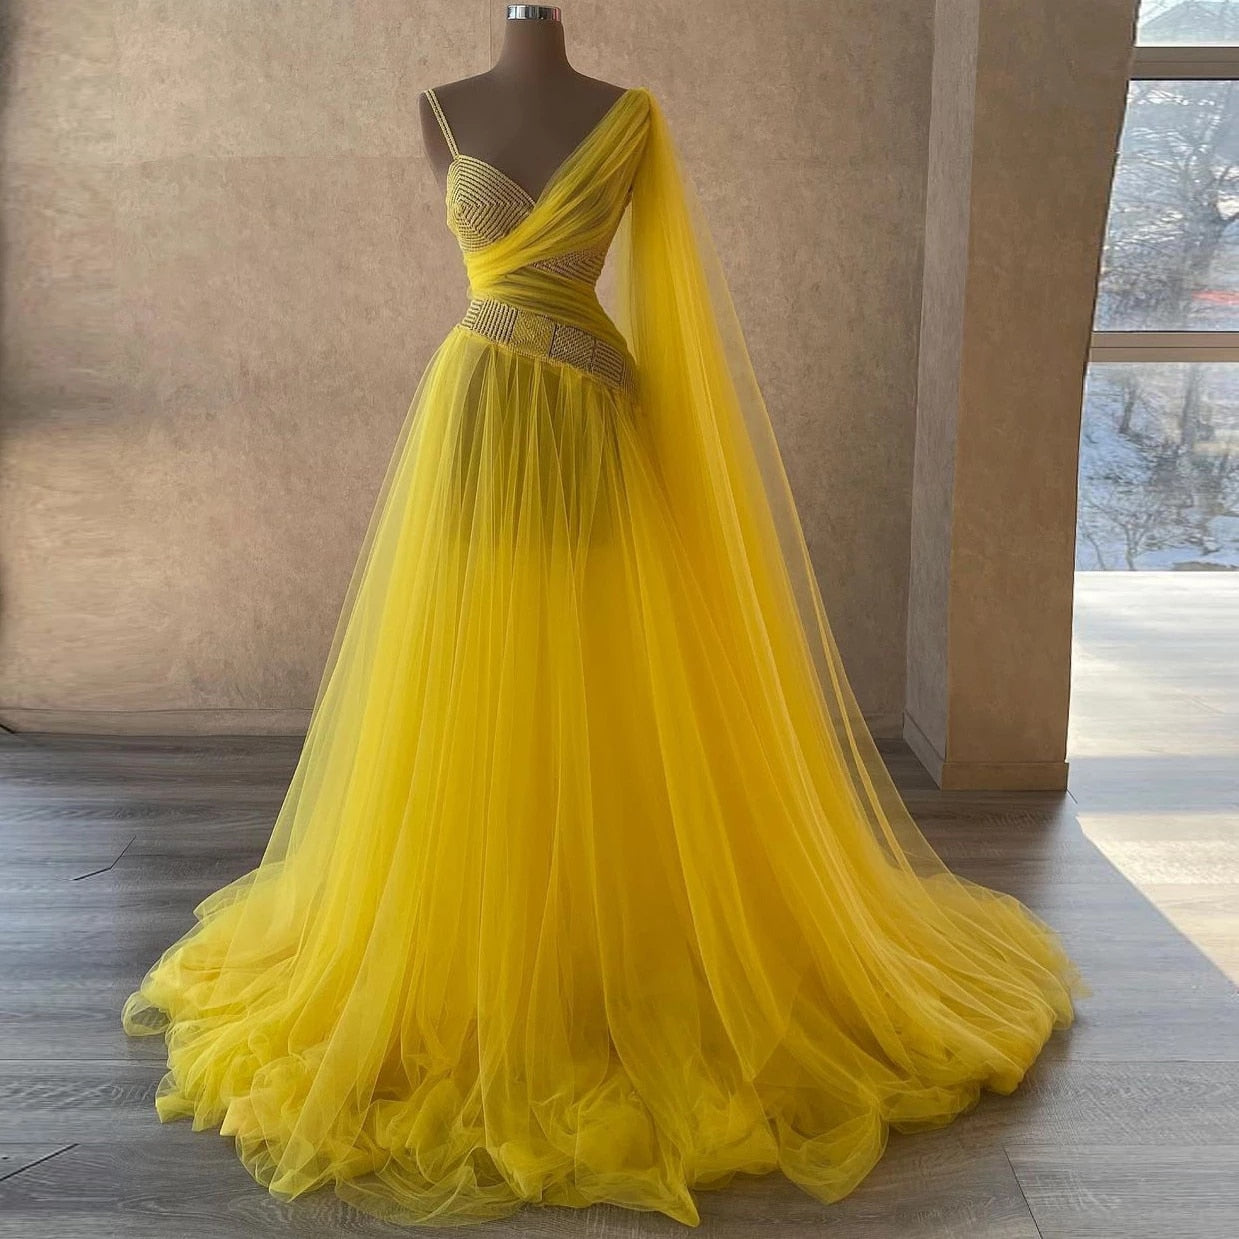 V-neck Prom Dress A-line Tulle Dress Long Sleeve Evening Dresses Yellow Pageant Dress Plus Size Dresses      fg808